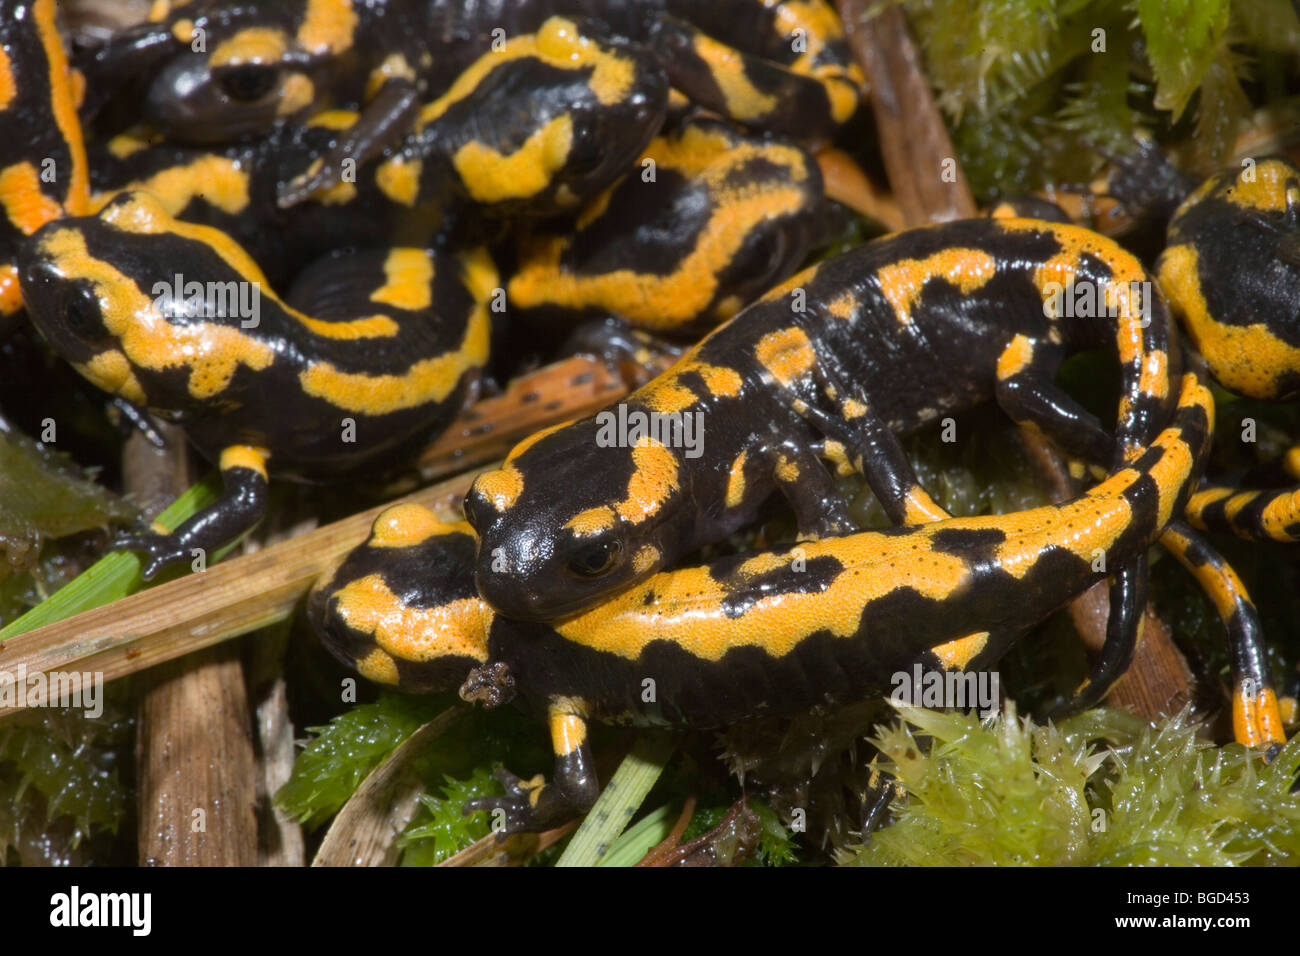 European Fire Salamanders (Salamandra salamandra). Group of recently metamorphosed young. Now terrestrial living. Stock Photo